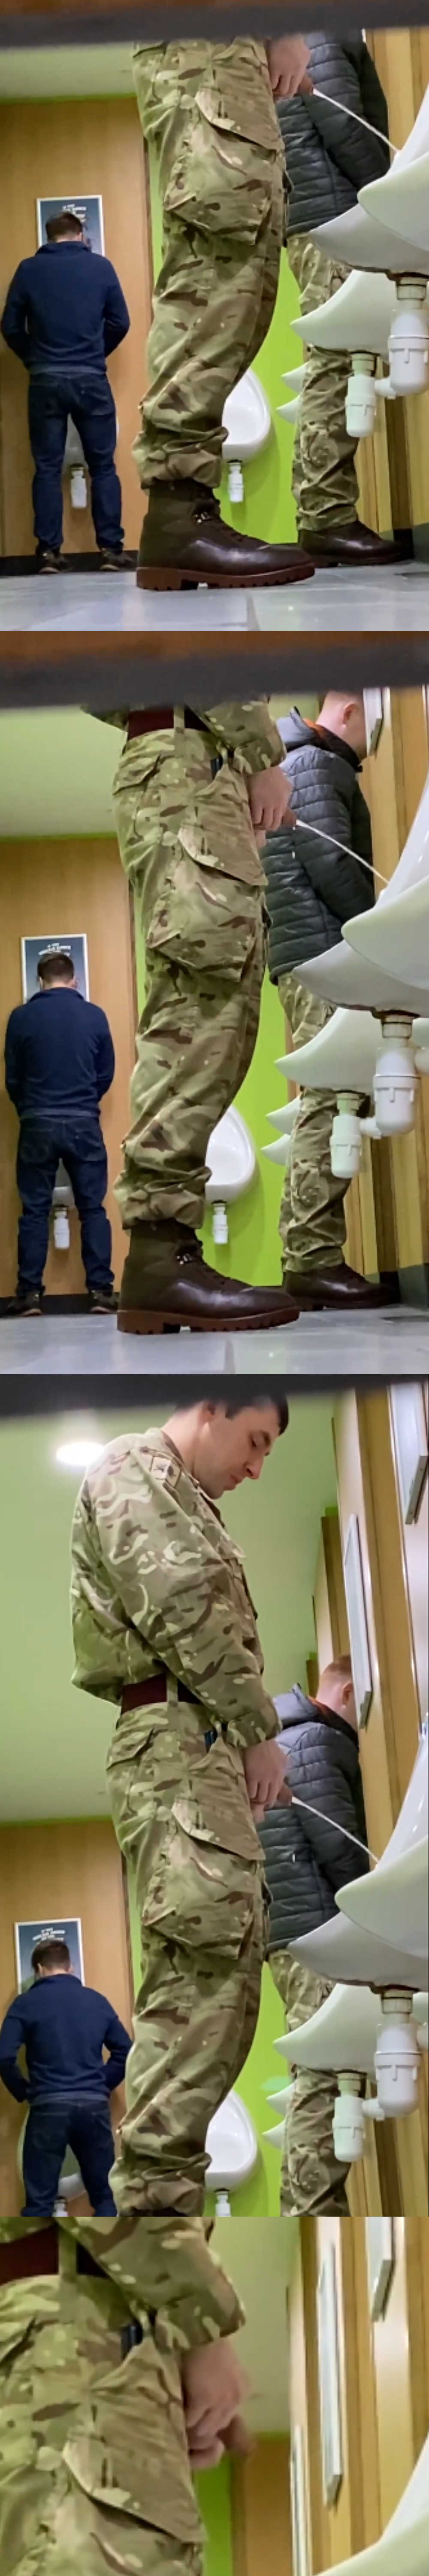 military man caught peeing urinal